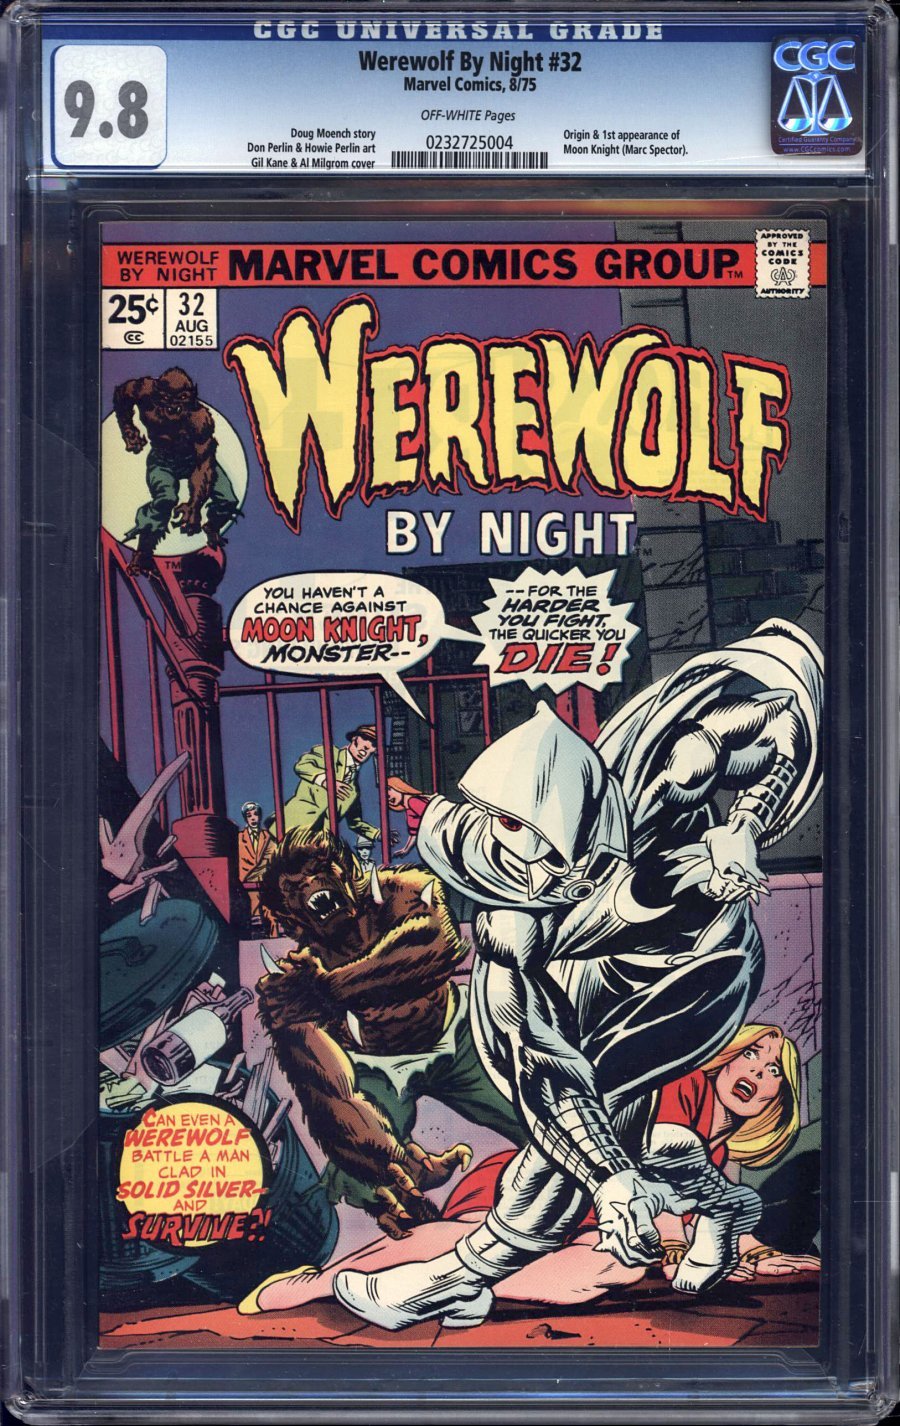 Where to Watch 'Werewolf by Night